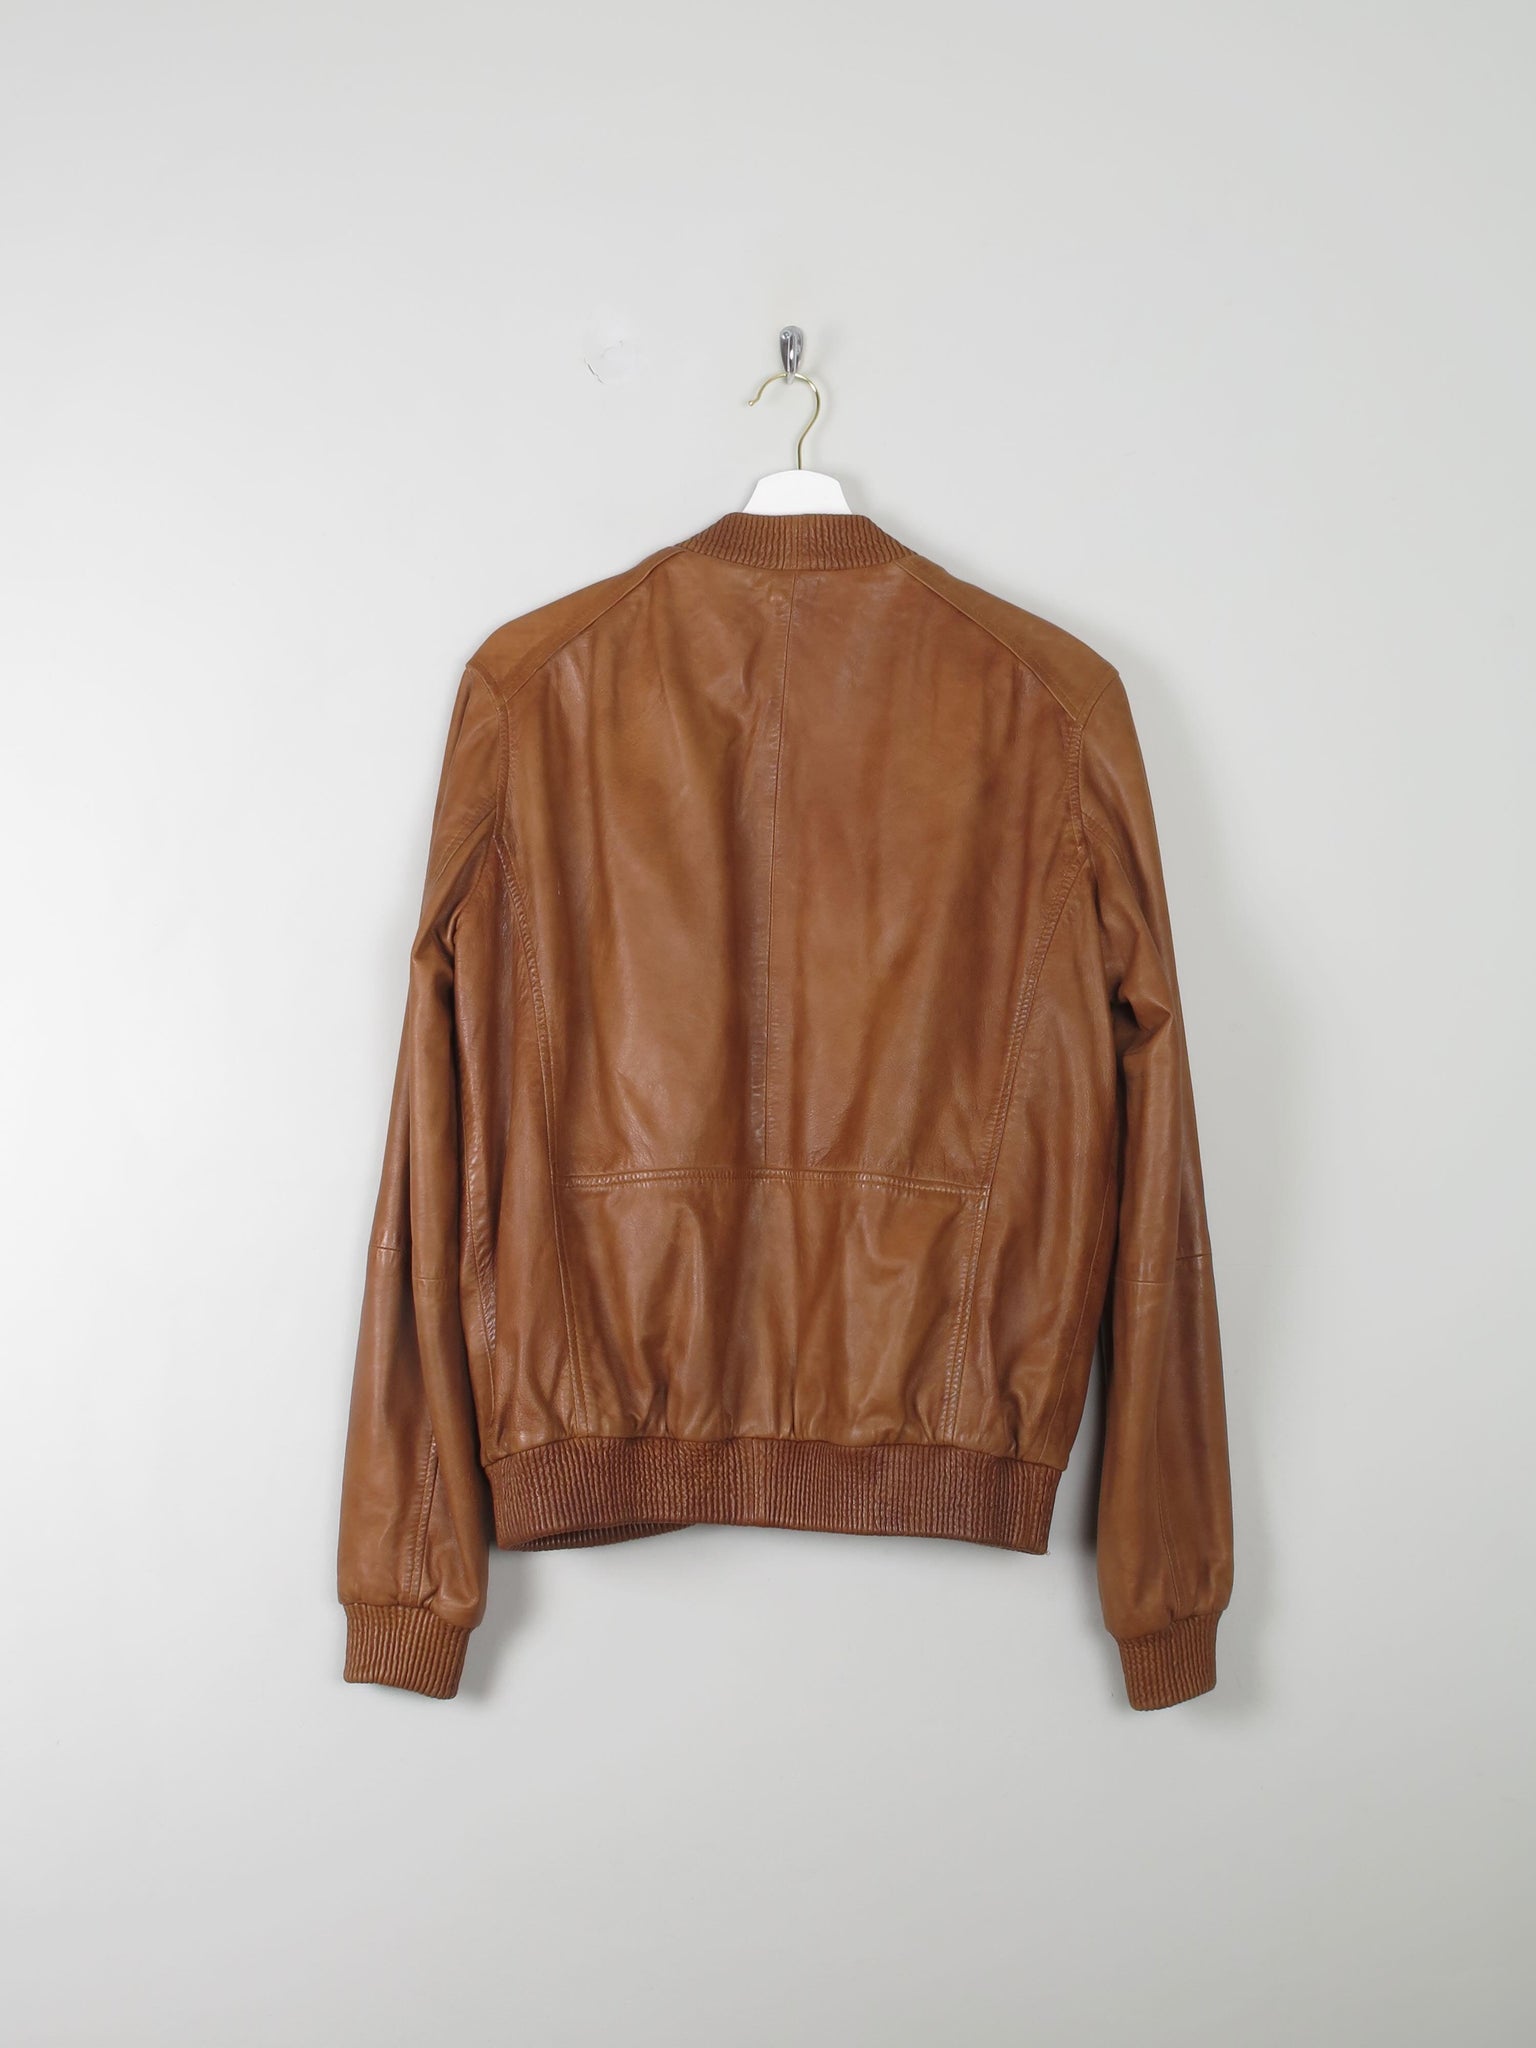 Men's Tan Vintage Napapijri Leather Jacket M